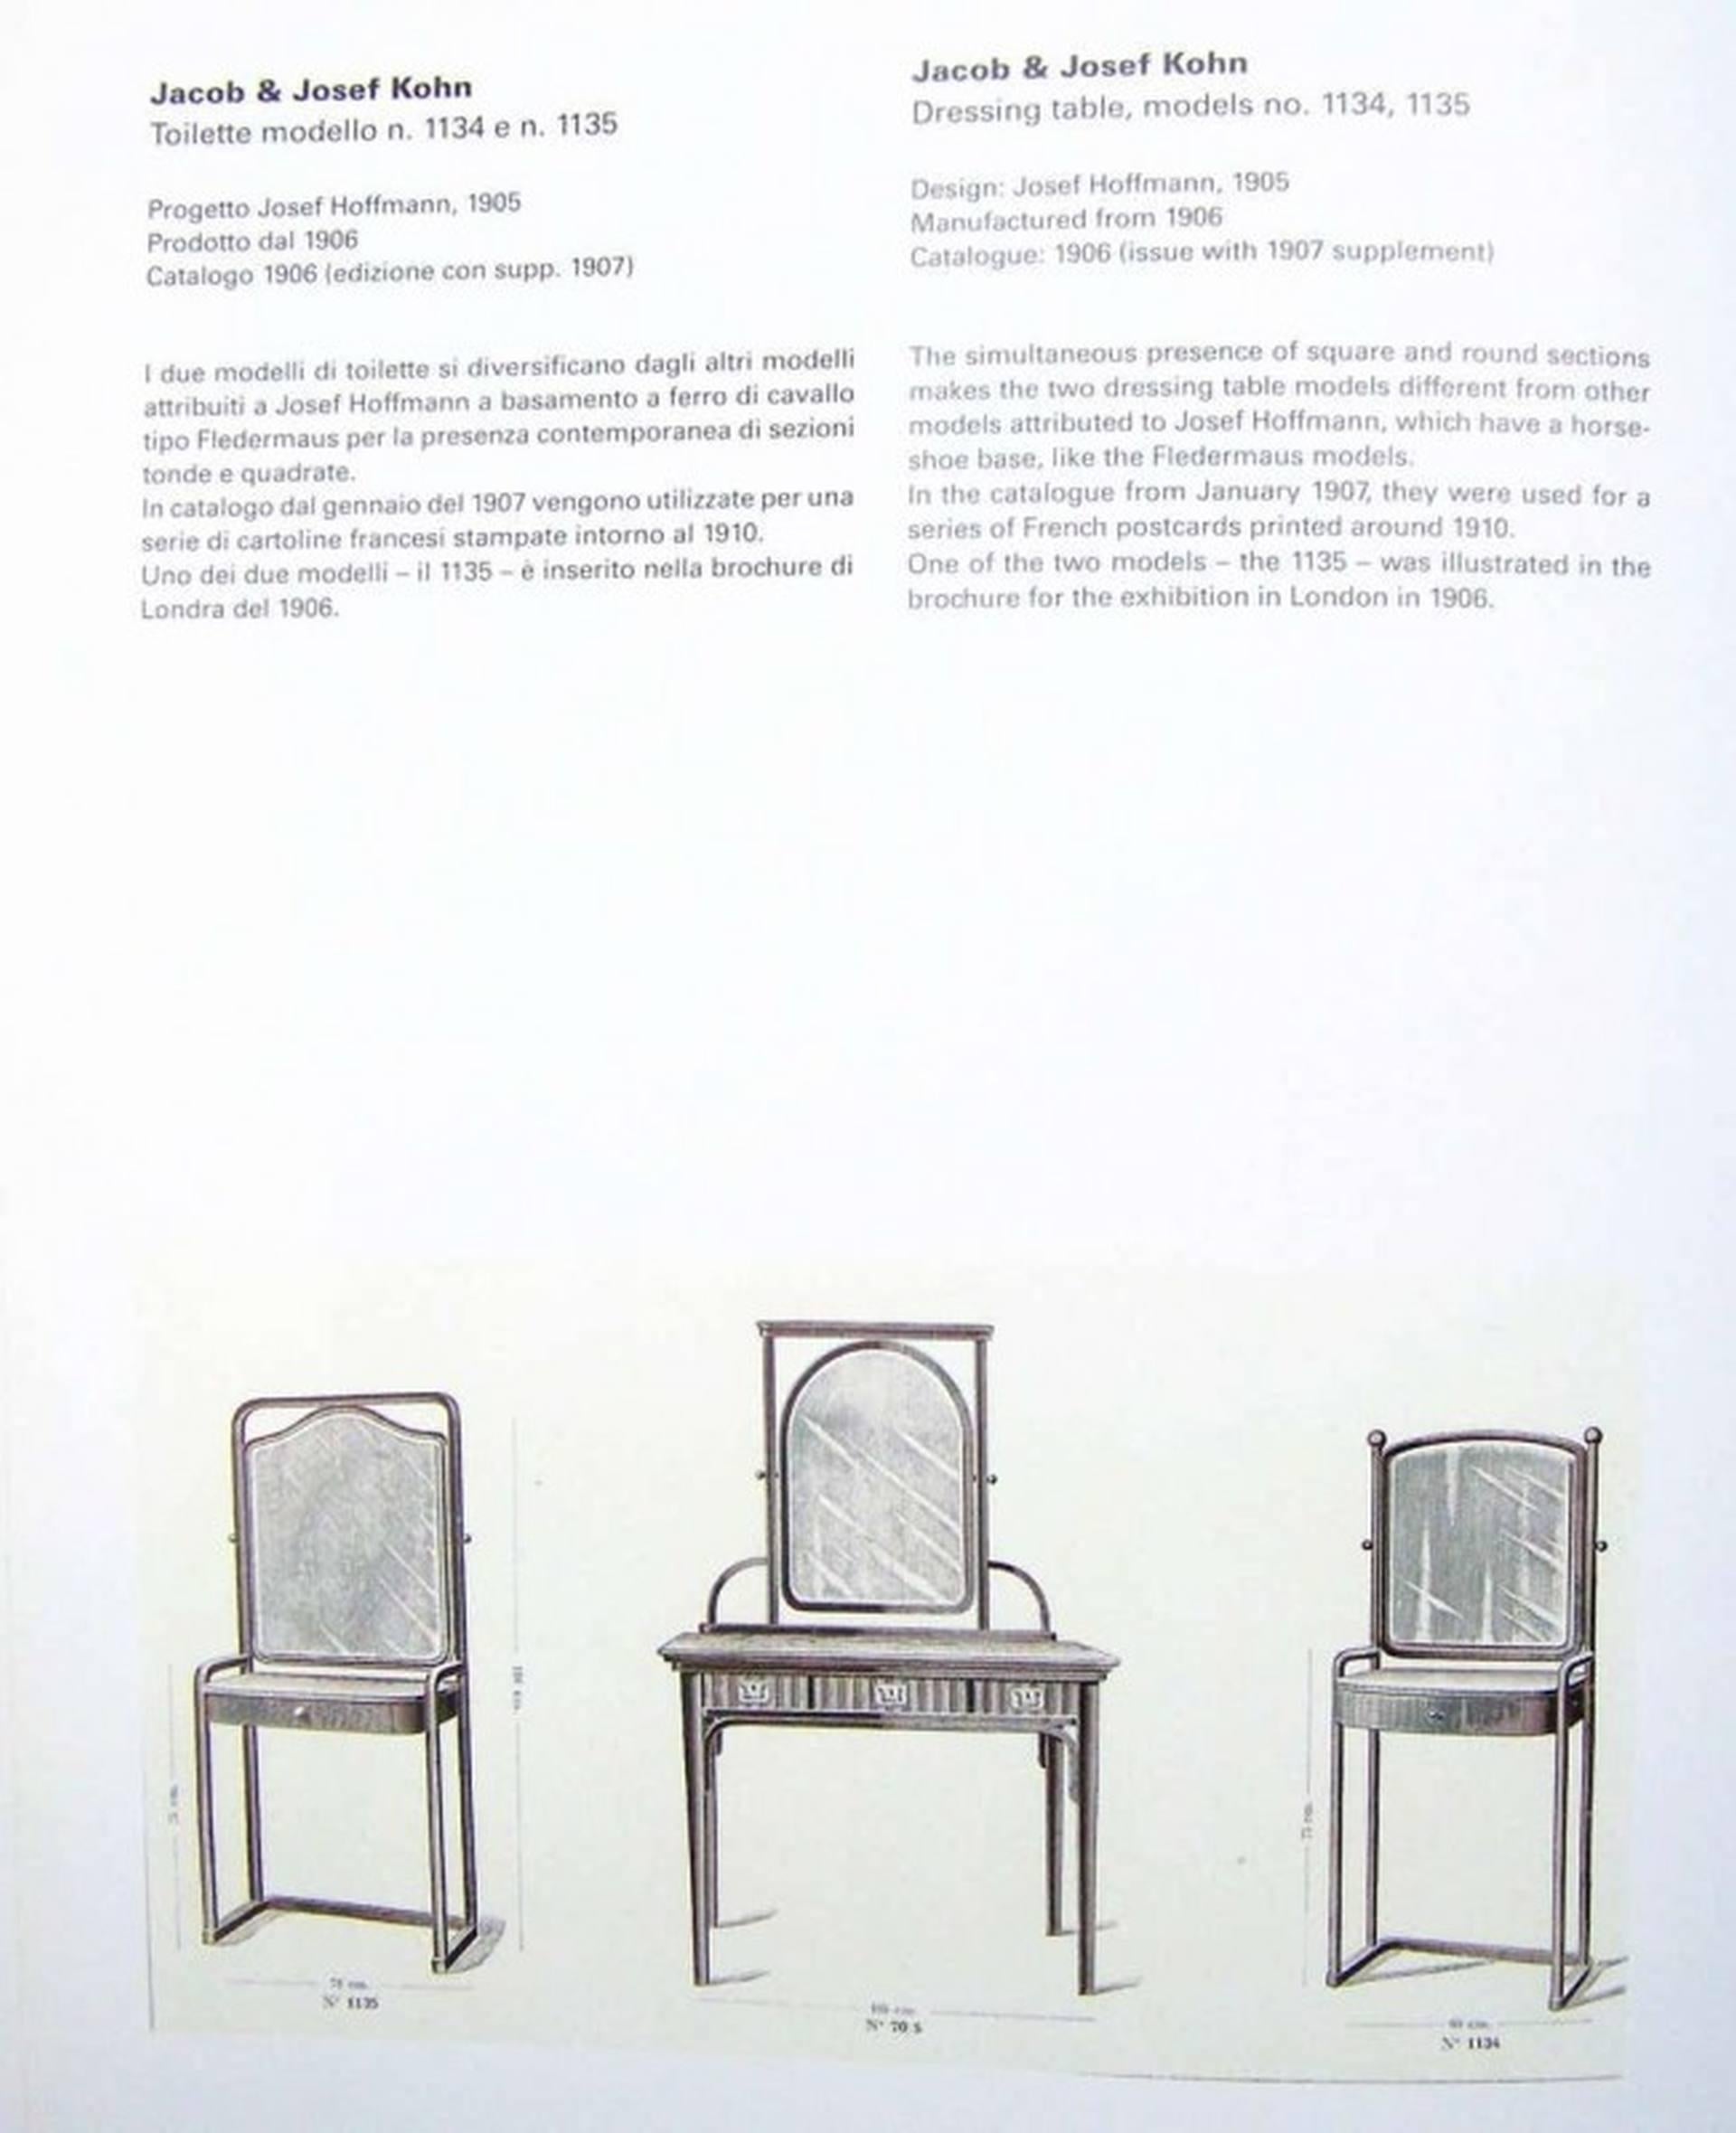 Dressing Table No.1134 by Josef Hoffmann for J&J Kohn For Sale 8